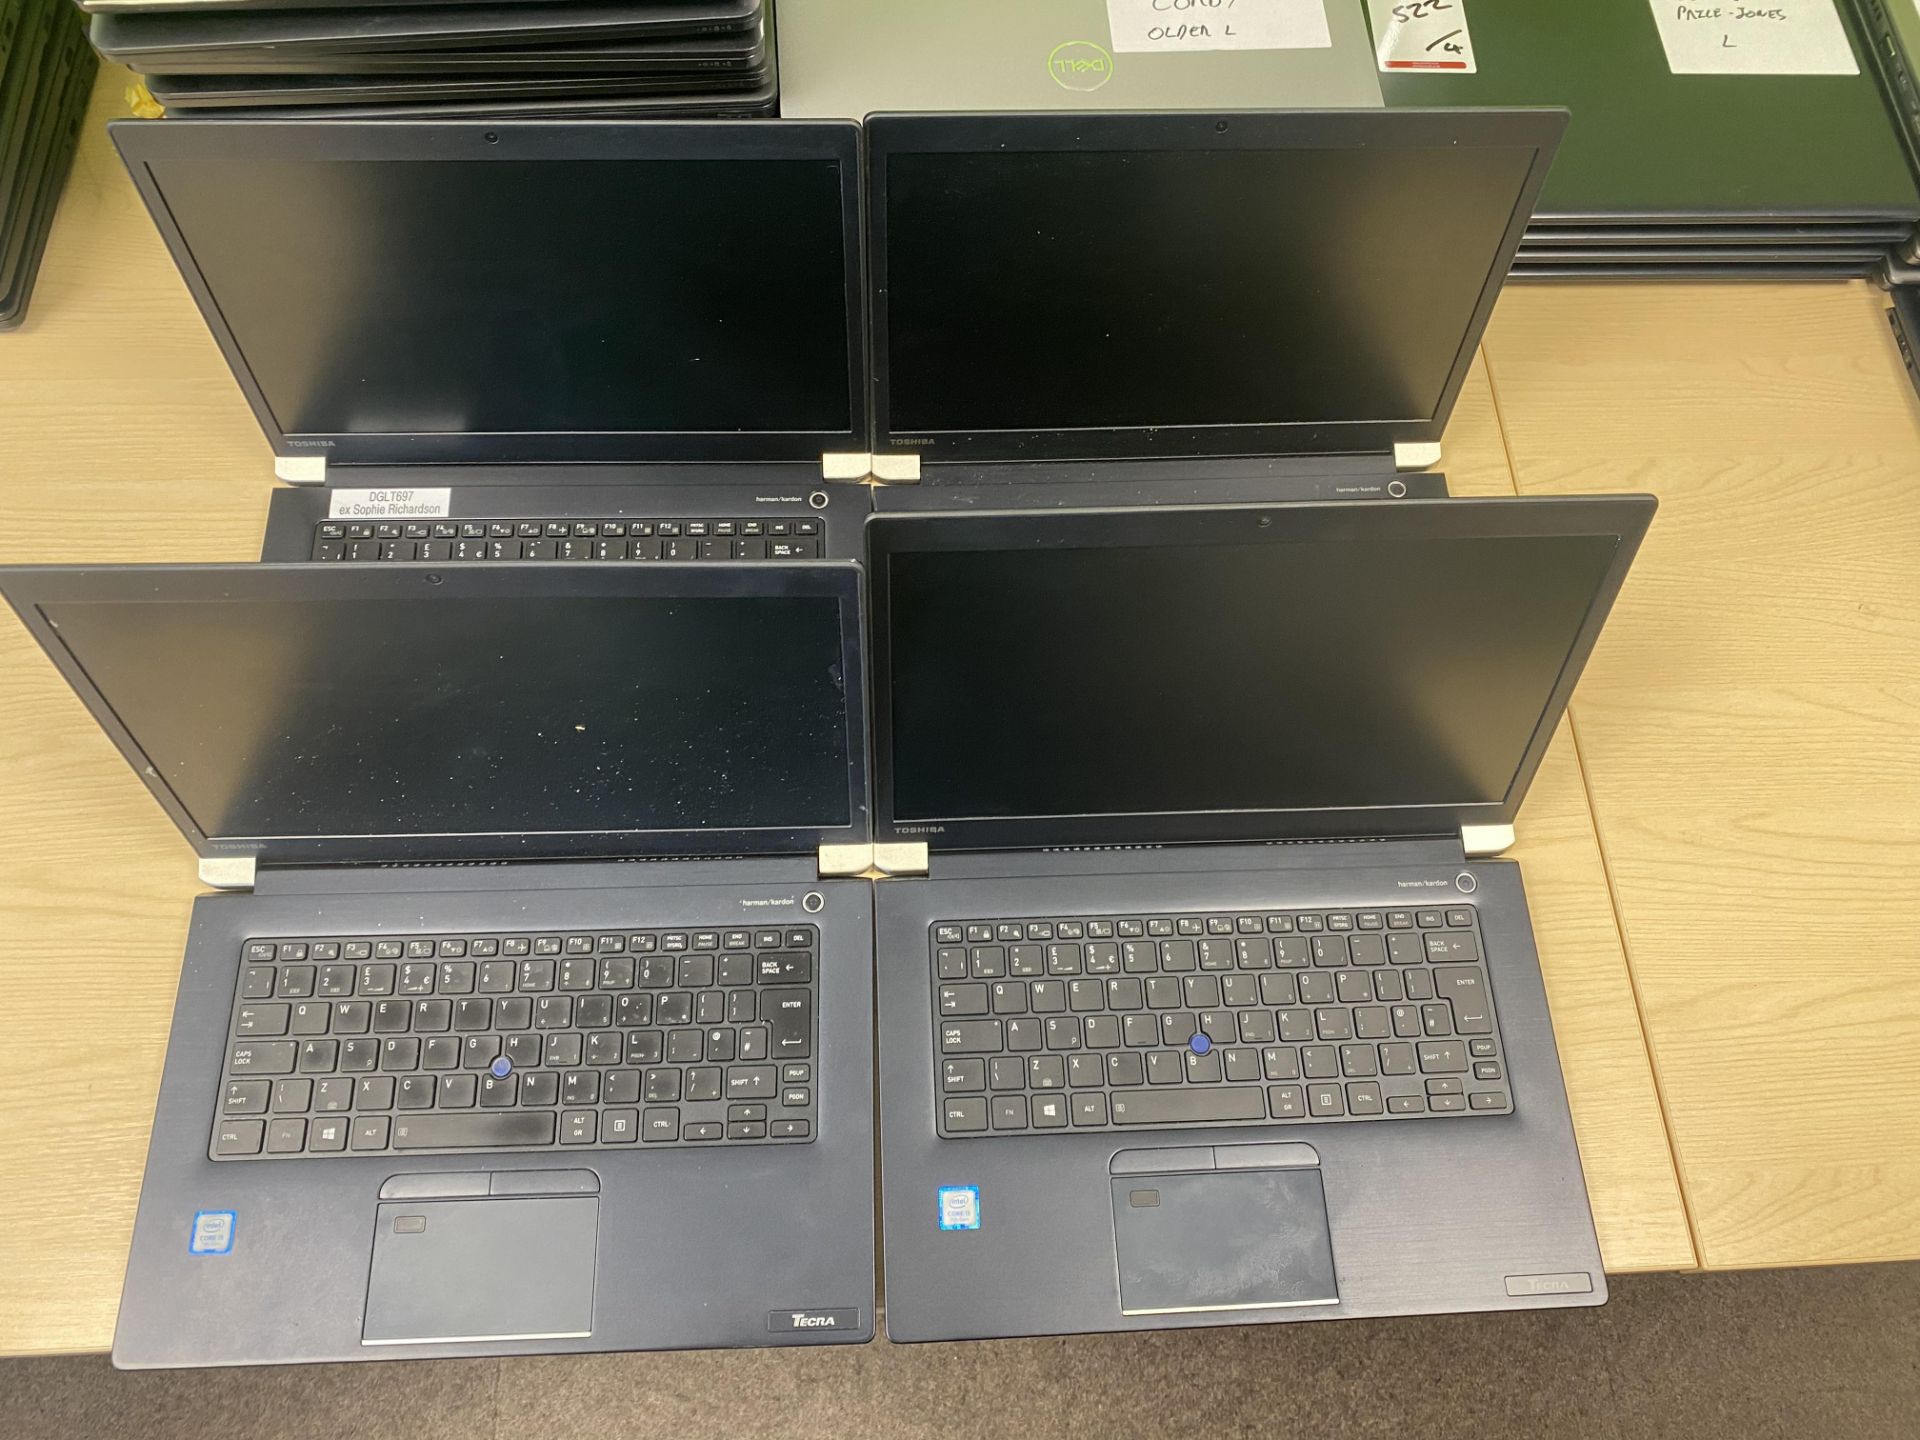 4x Toshiba Tecra laptops complete with intel I5 processors